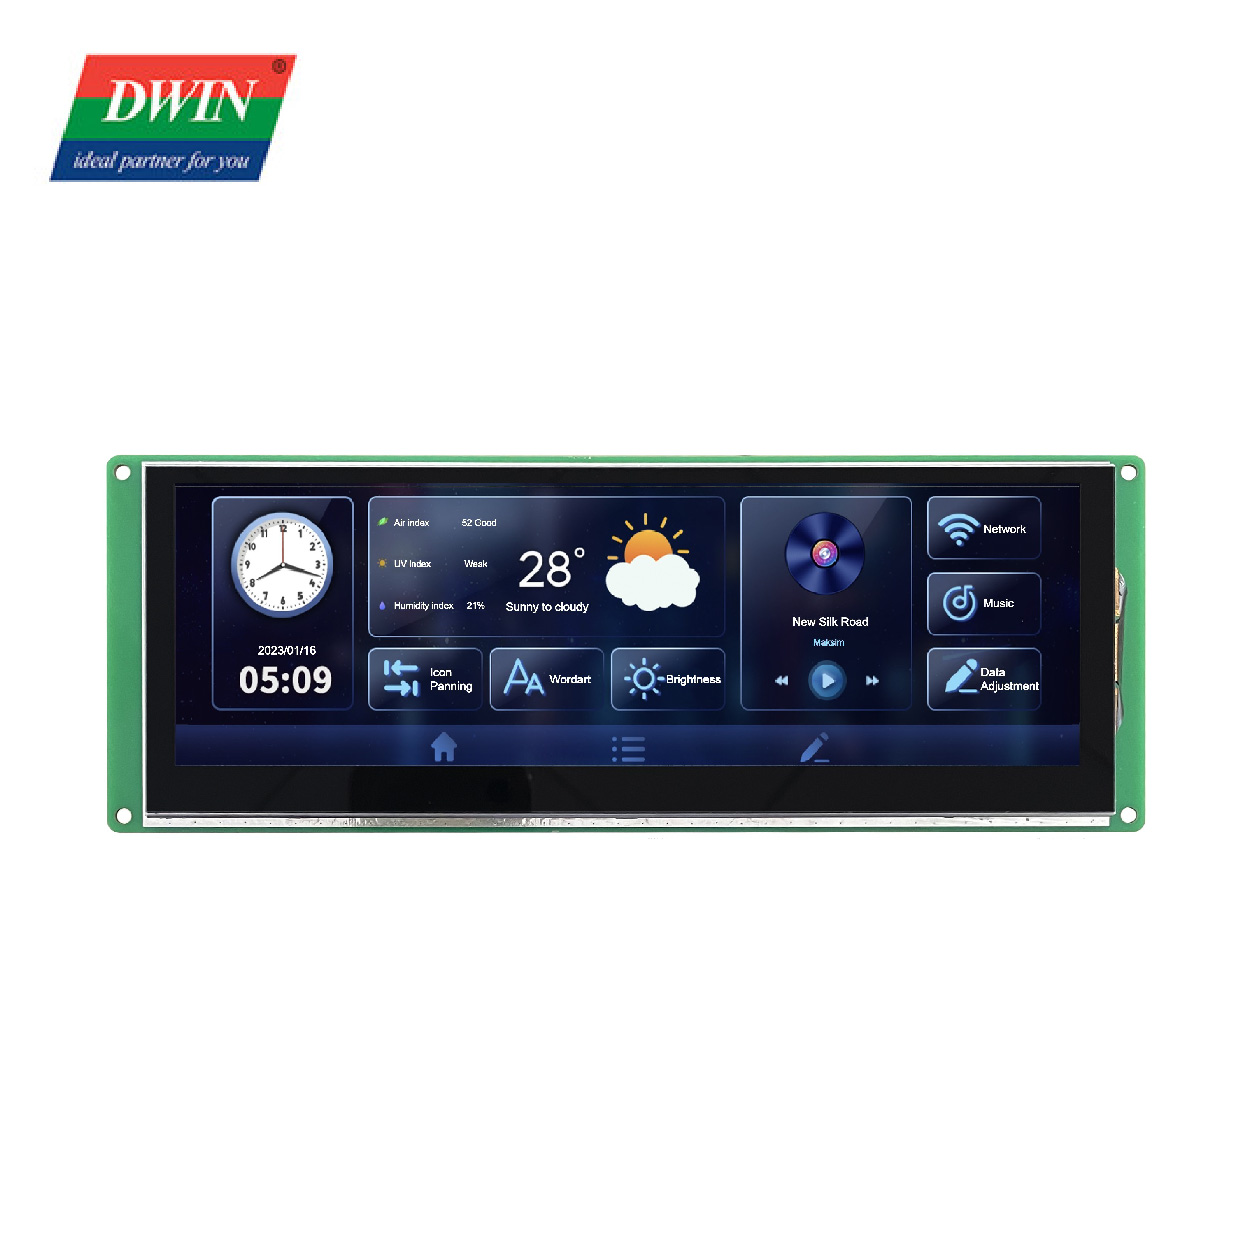 7.4 Inch Serial Port Bar LCD DMG12400C074_03W(Commercial Grade)